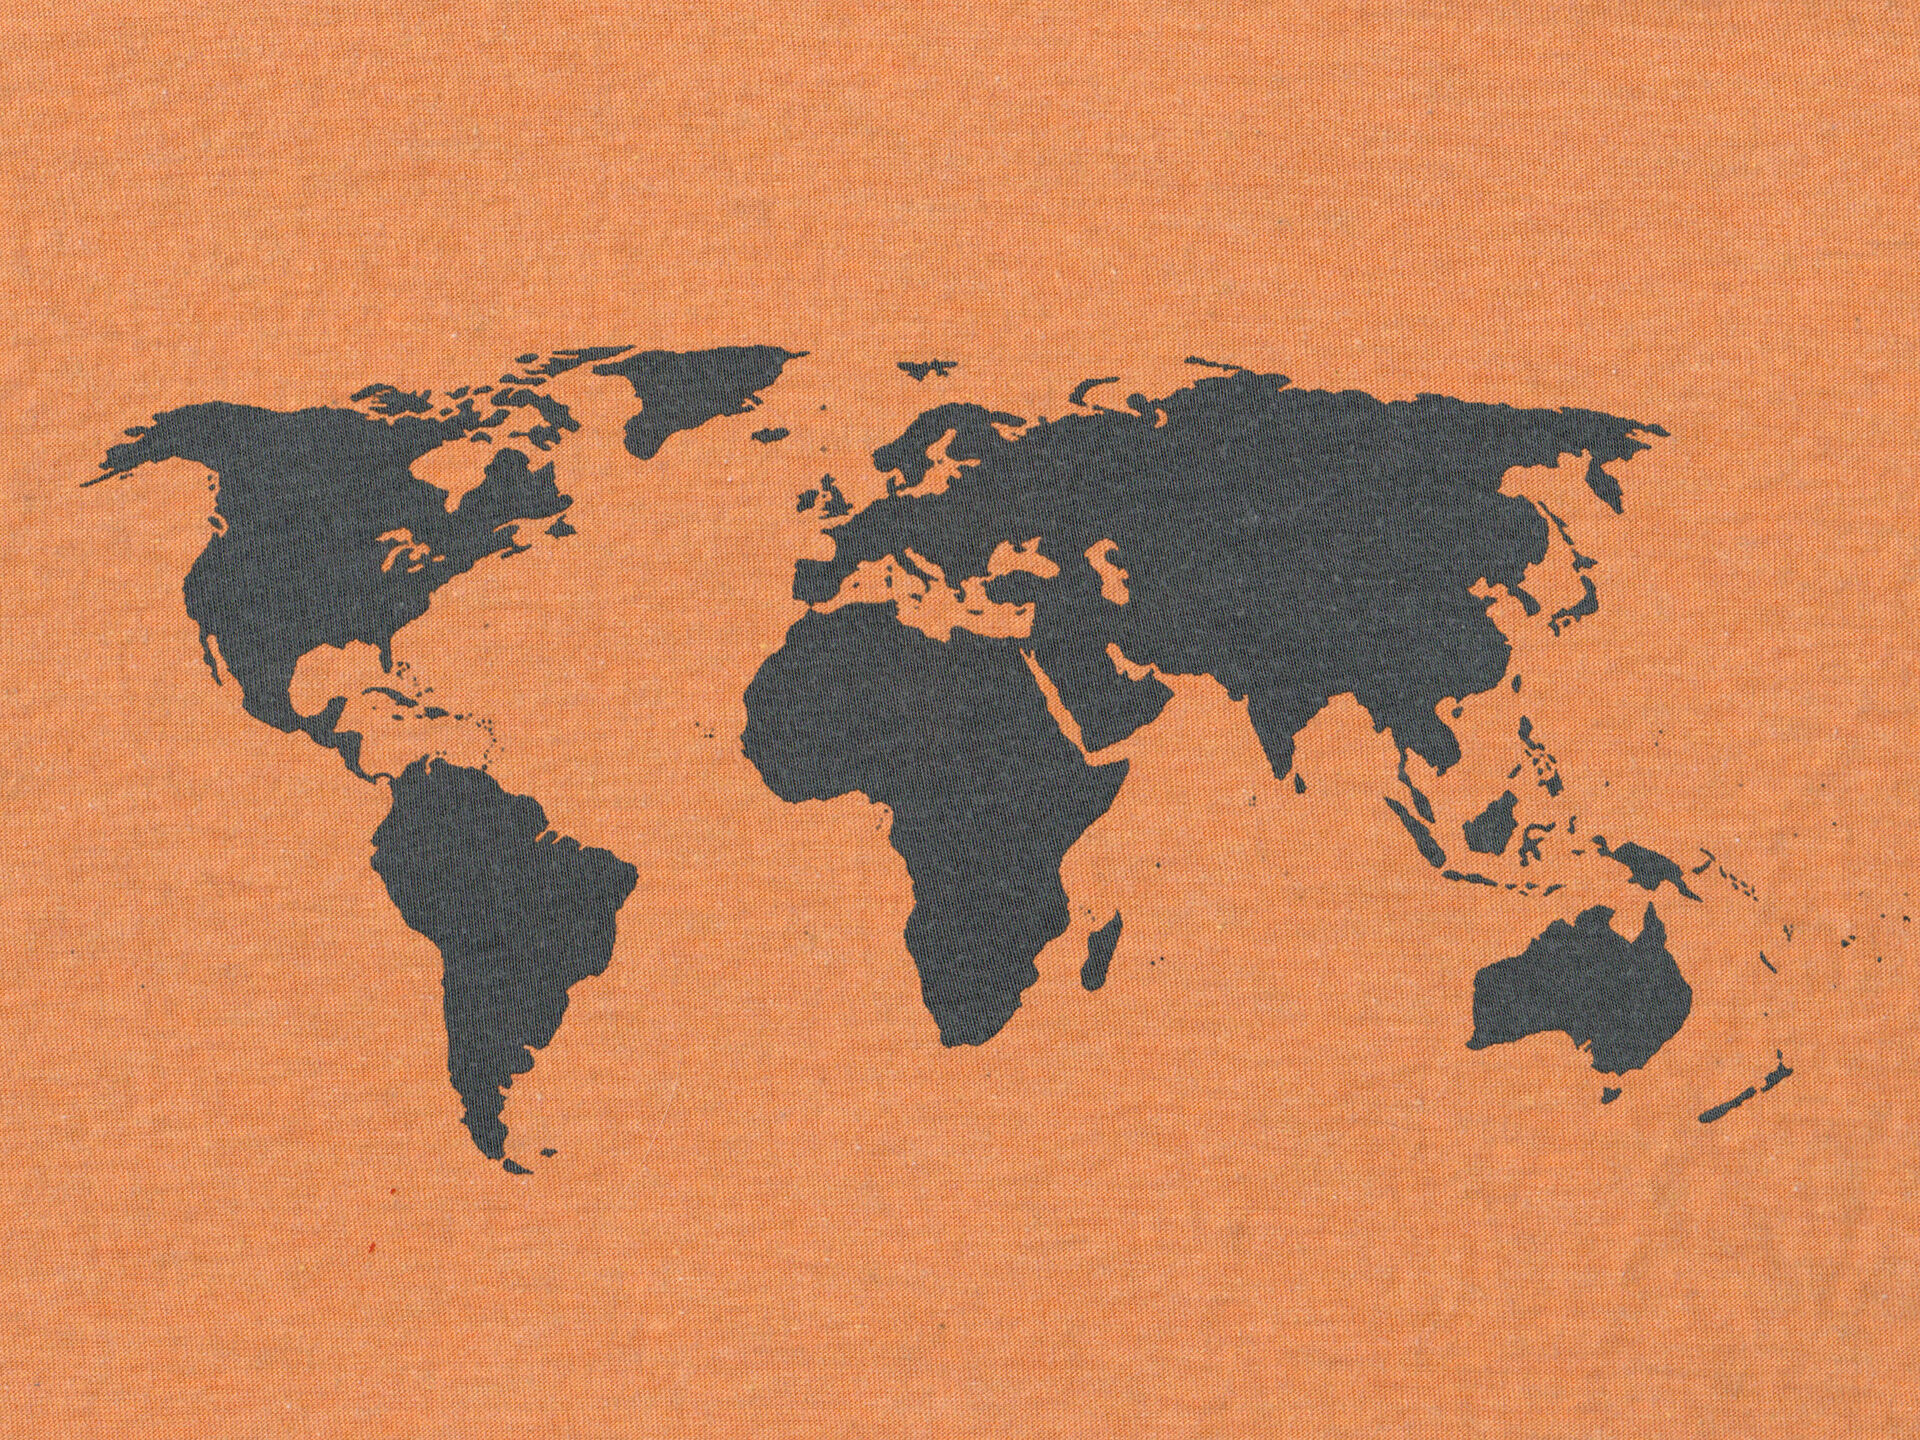  World map, orange background, black continent